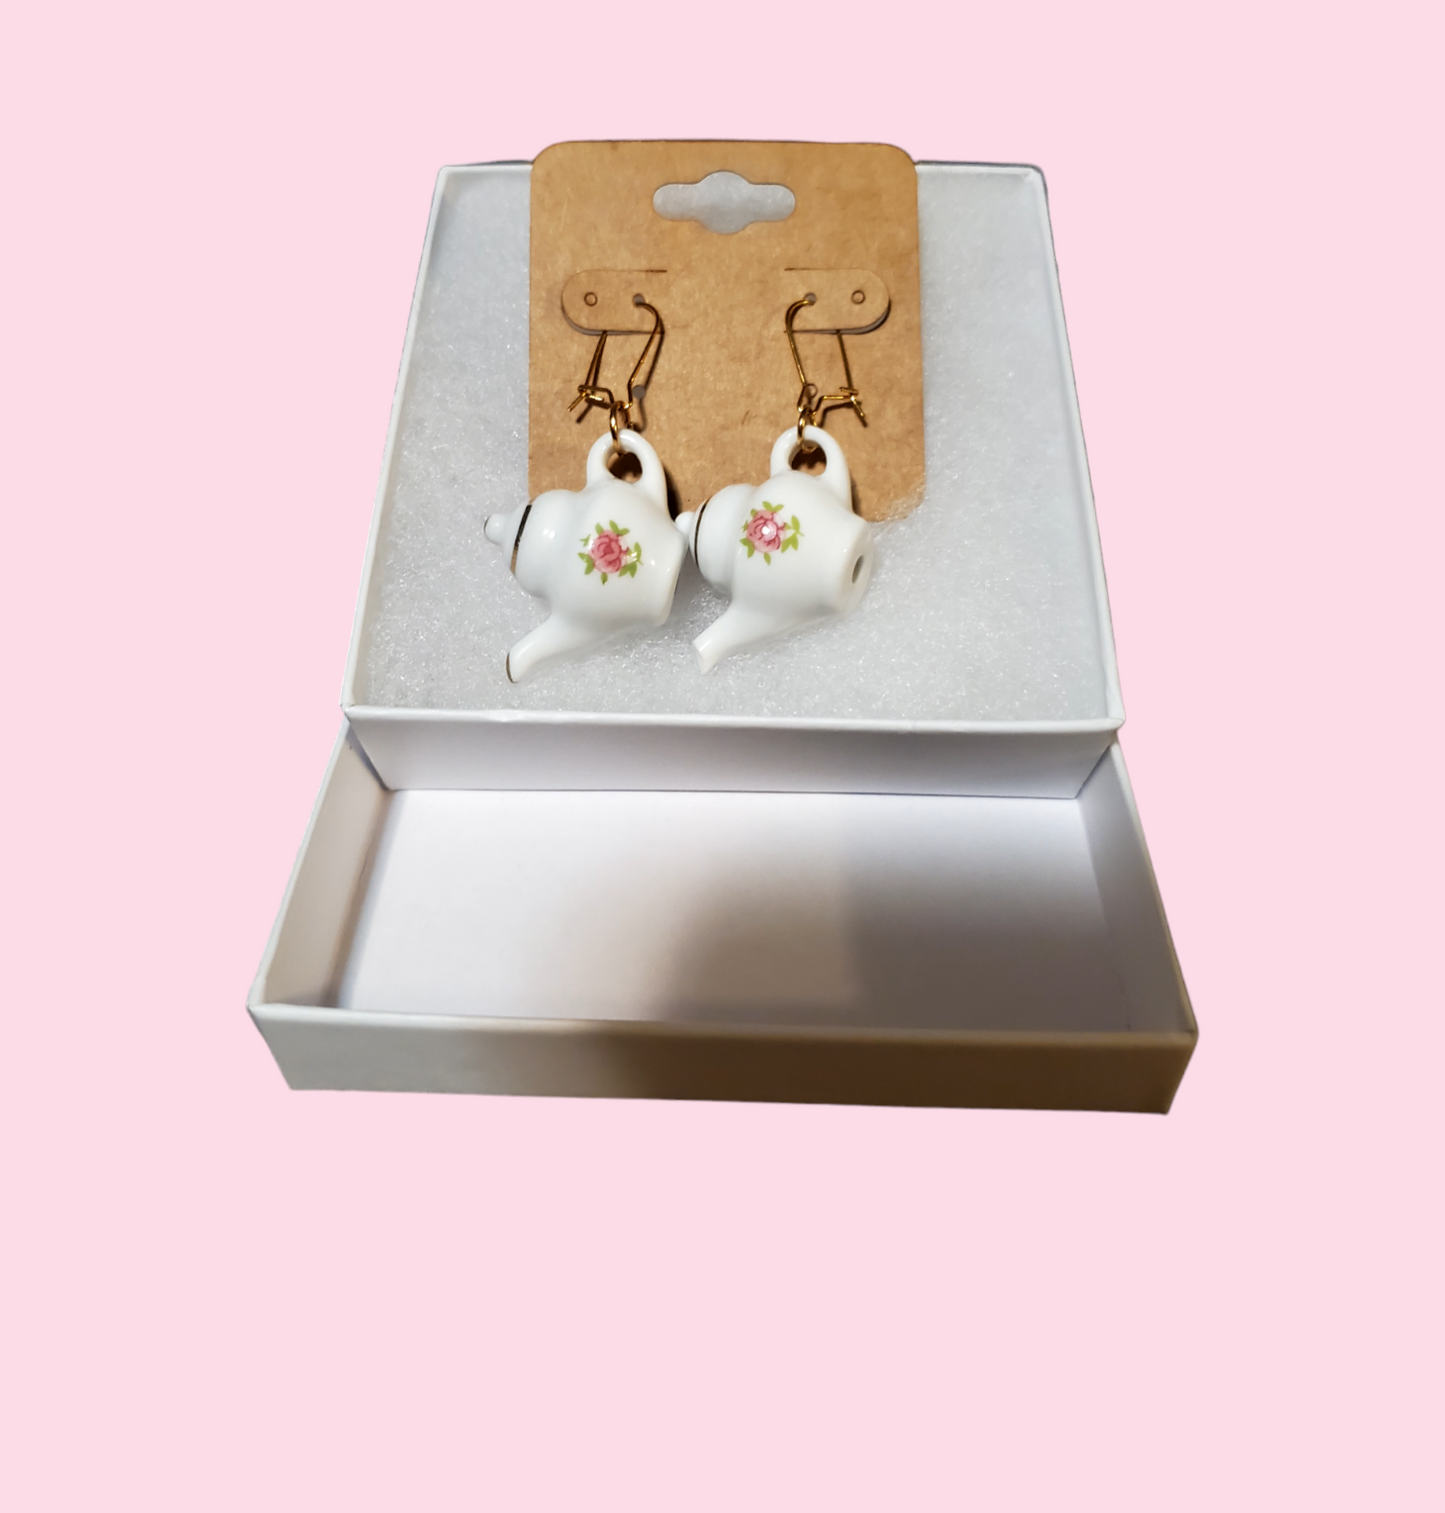 Tea Cup and Mushroom Earrings